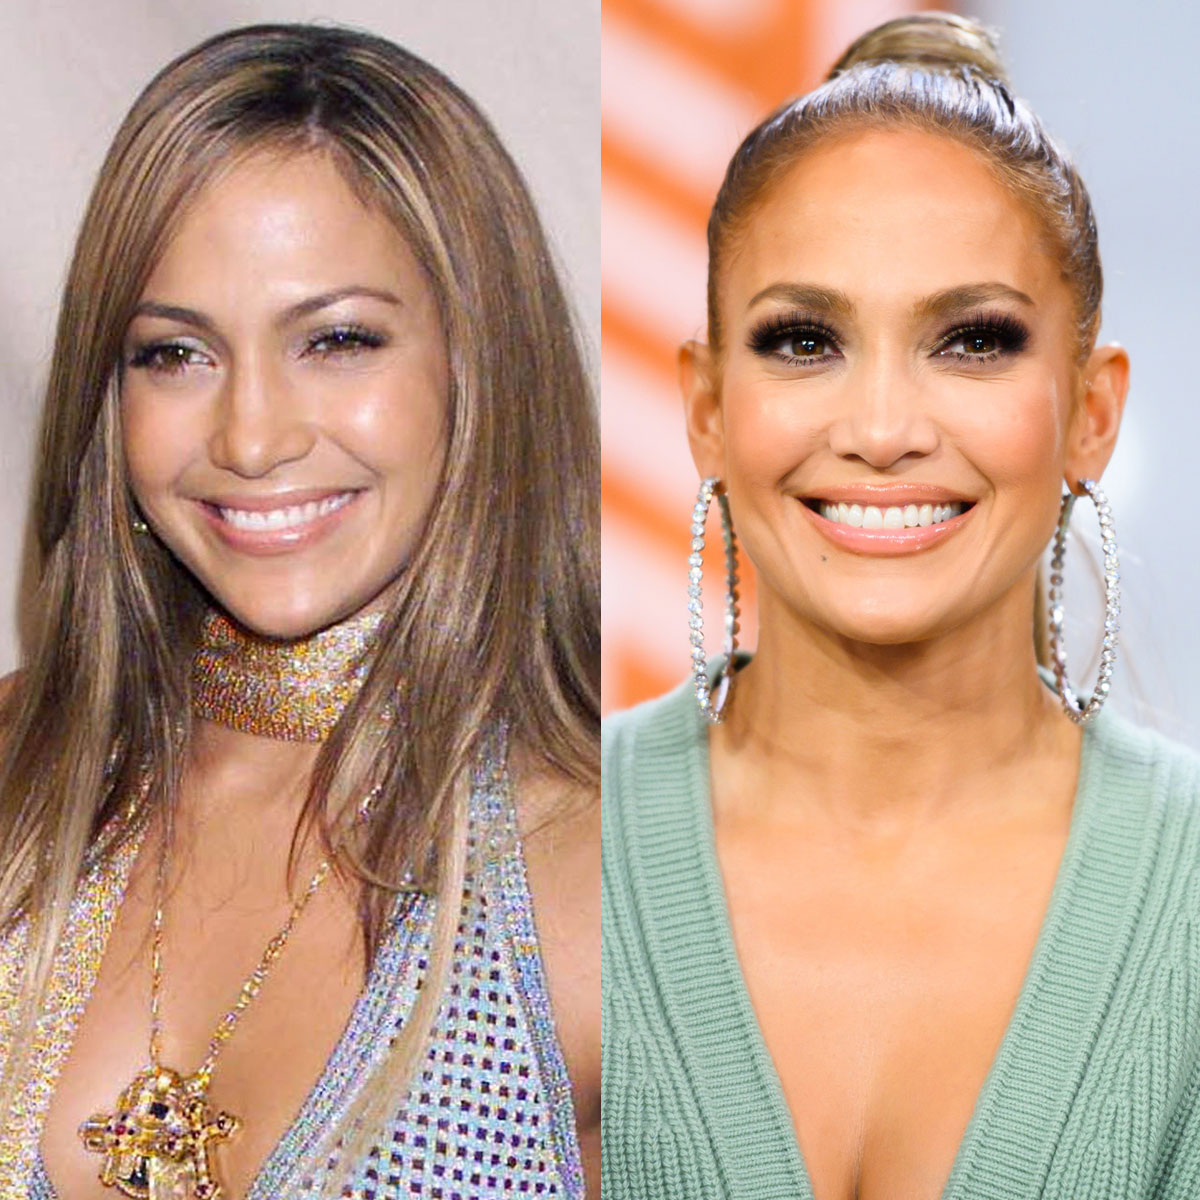 Did Jennifer Lopez Undergo Plastic Surgery? Body Measurements and More